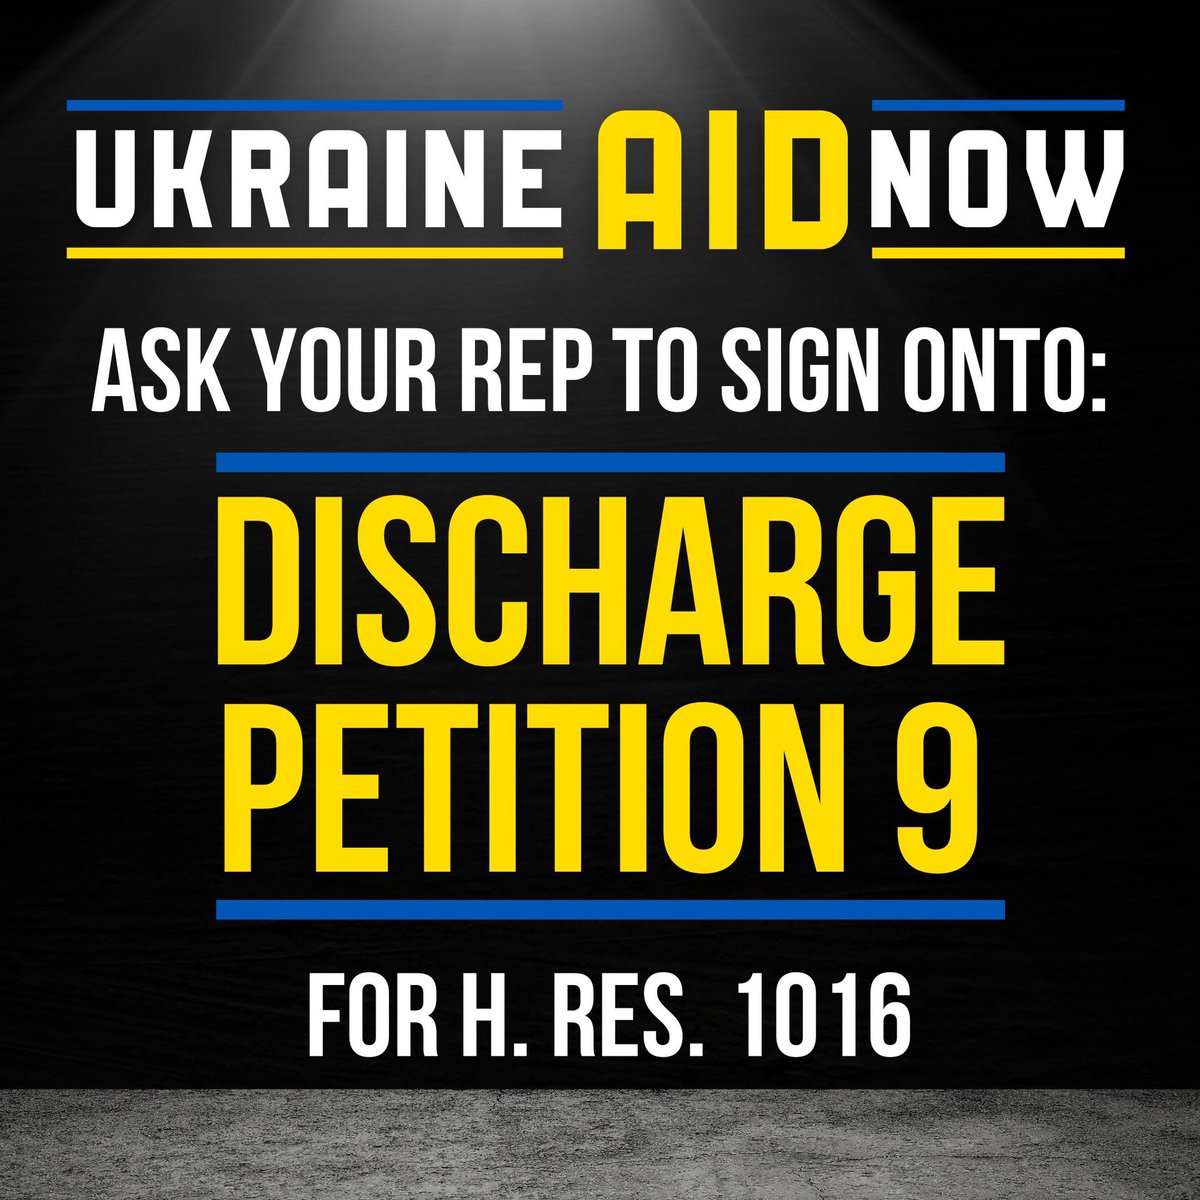 Please share the post below!

#NAFOarticle5 
#HRes1016
#HR1016
#ArmUkraineNow 
#ArmUkraineToWin 
#Ukraine 
#Fellas
#NAFO